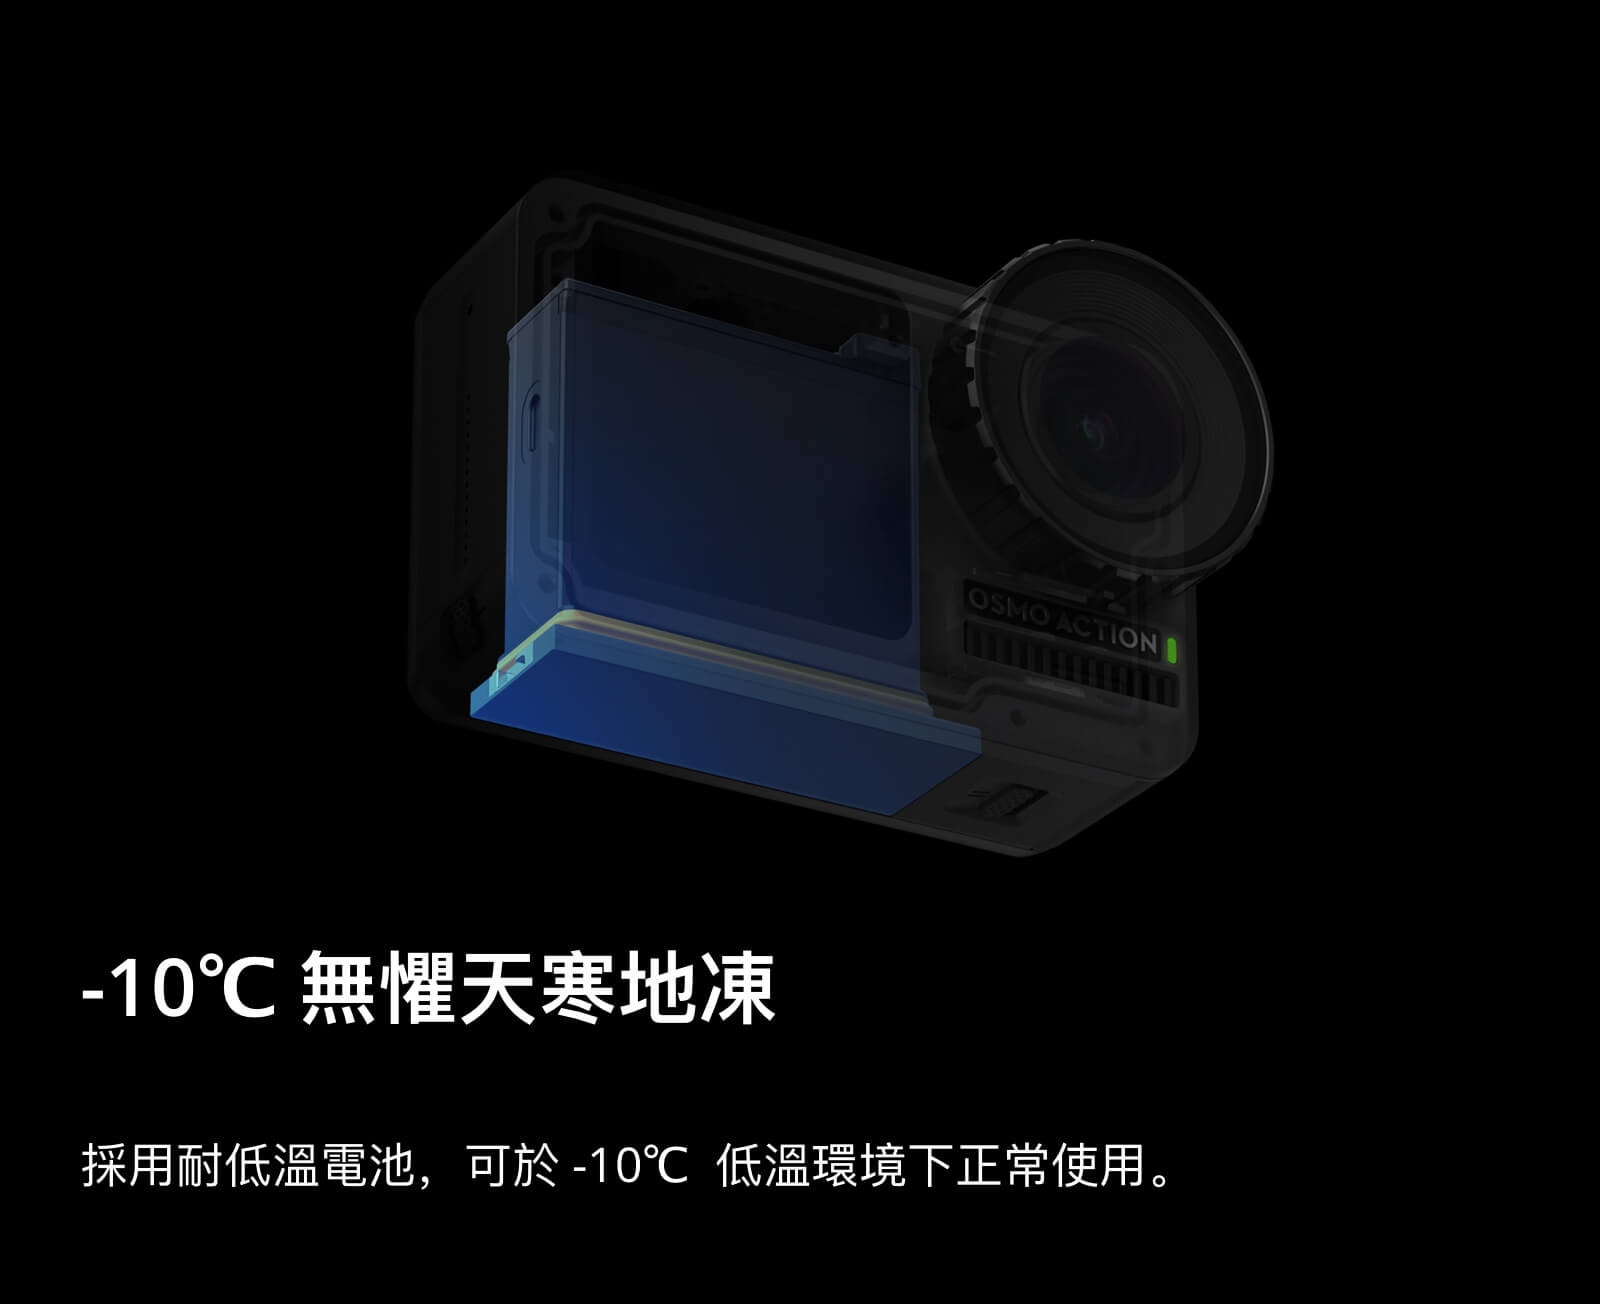 DJI 大疆創新 OSMO Action 運動相機/攝影機 (公司貨)